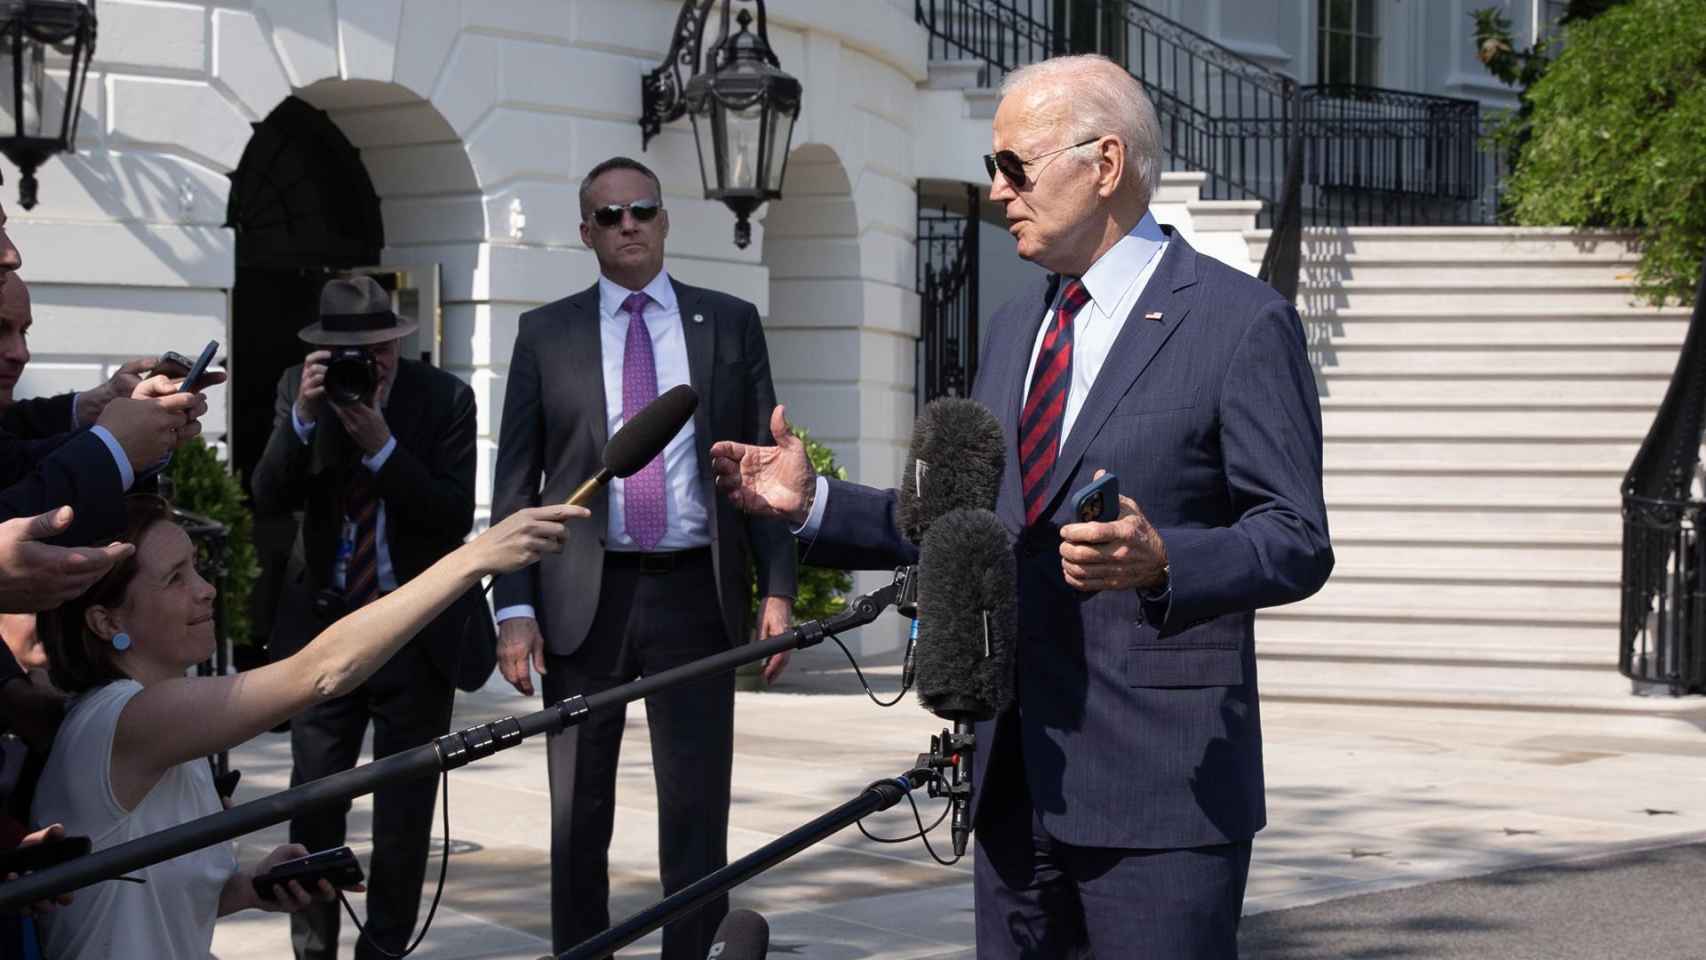 US President Joe Biden departs the White House